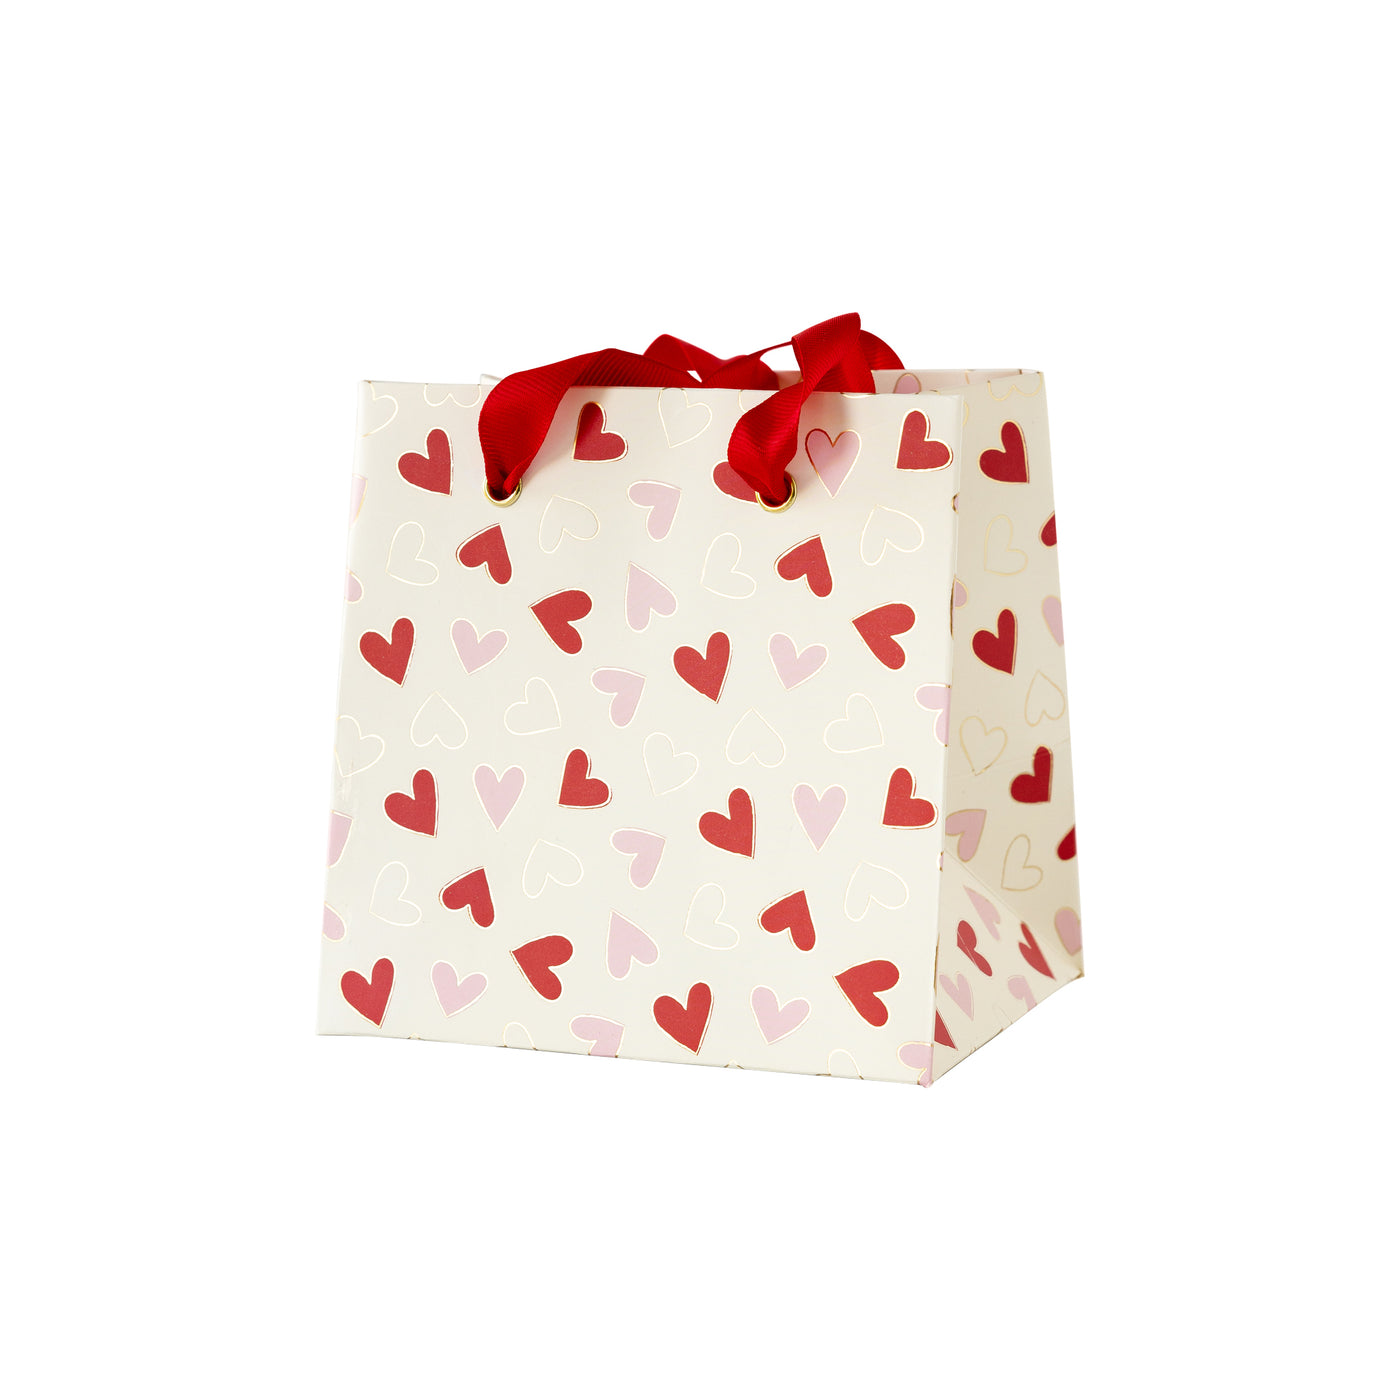 PLGBS69 - Gold Outline Hearts Gift Bag Set